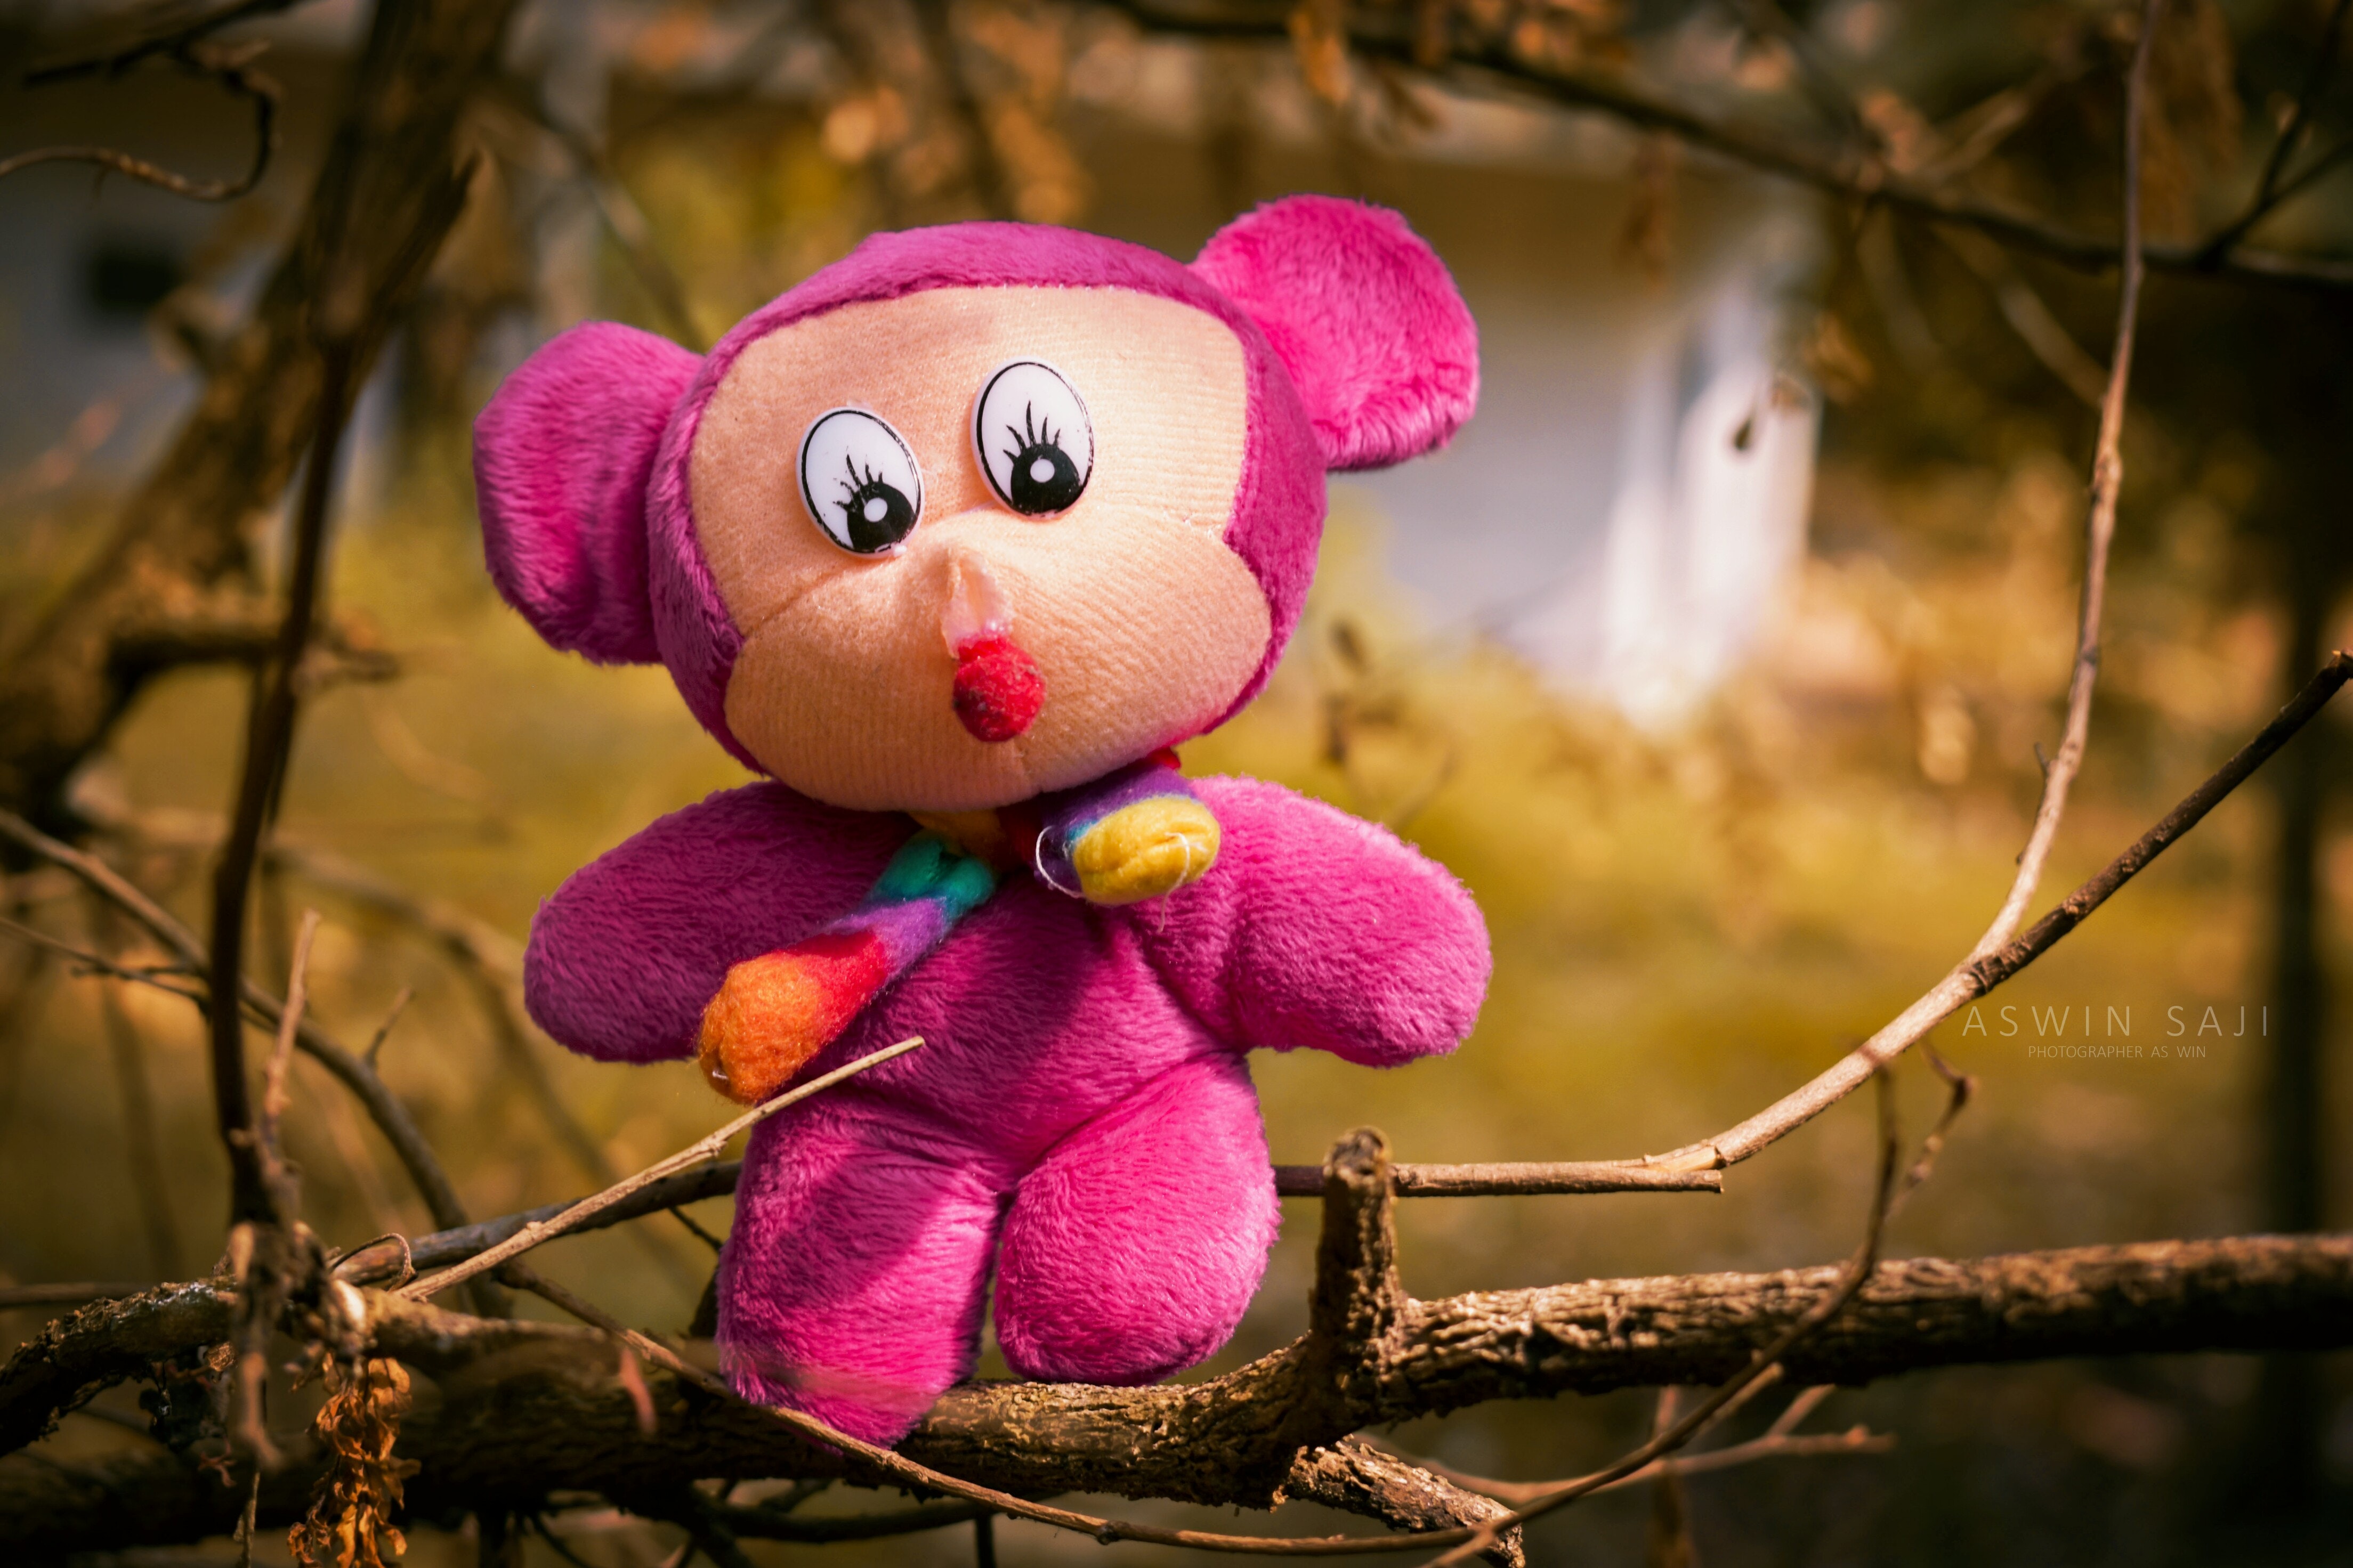 jouets papier peint,jouet en peluche,rose,jouet,peluche,arbre